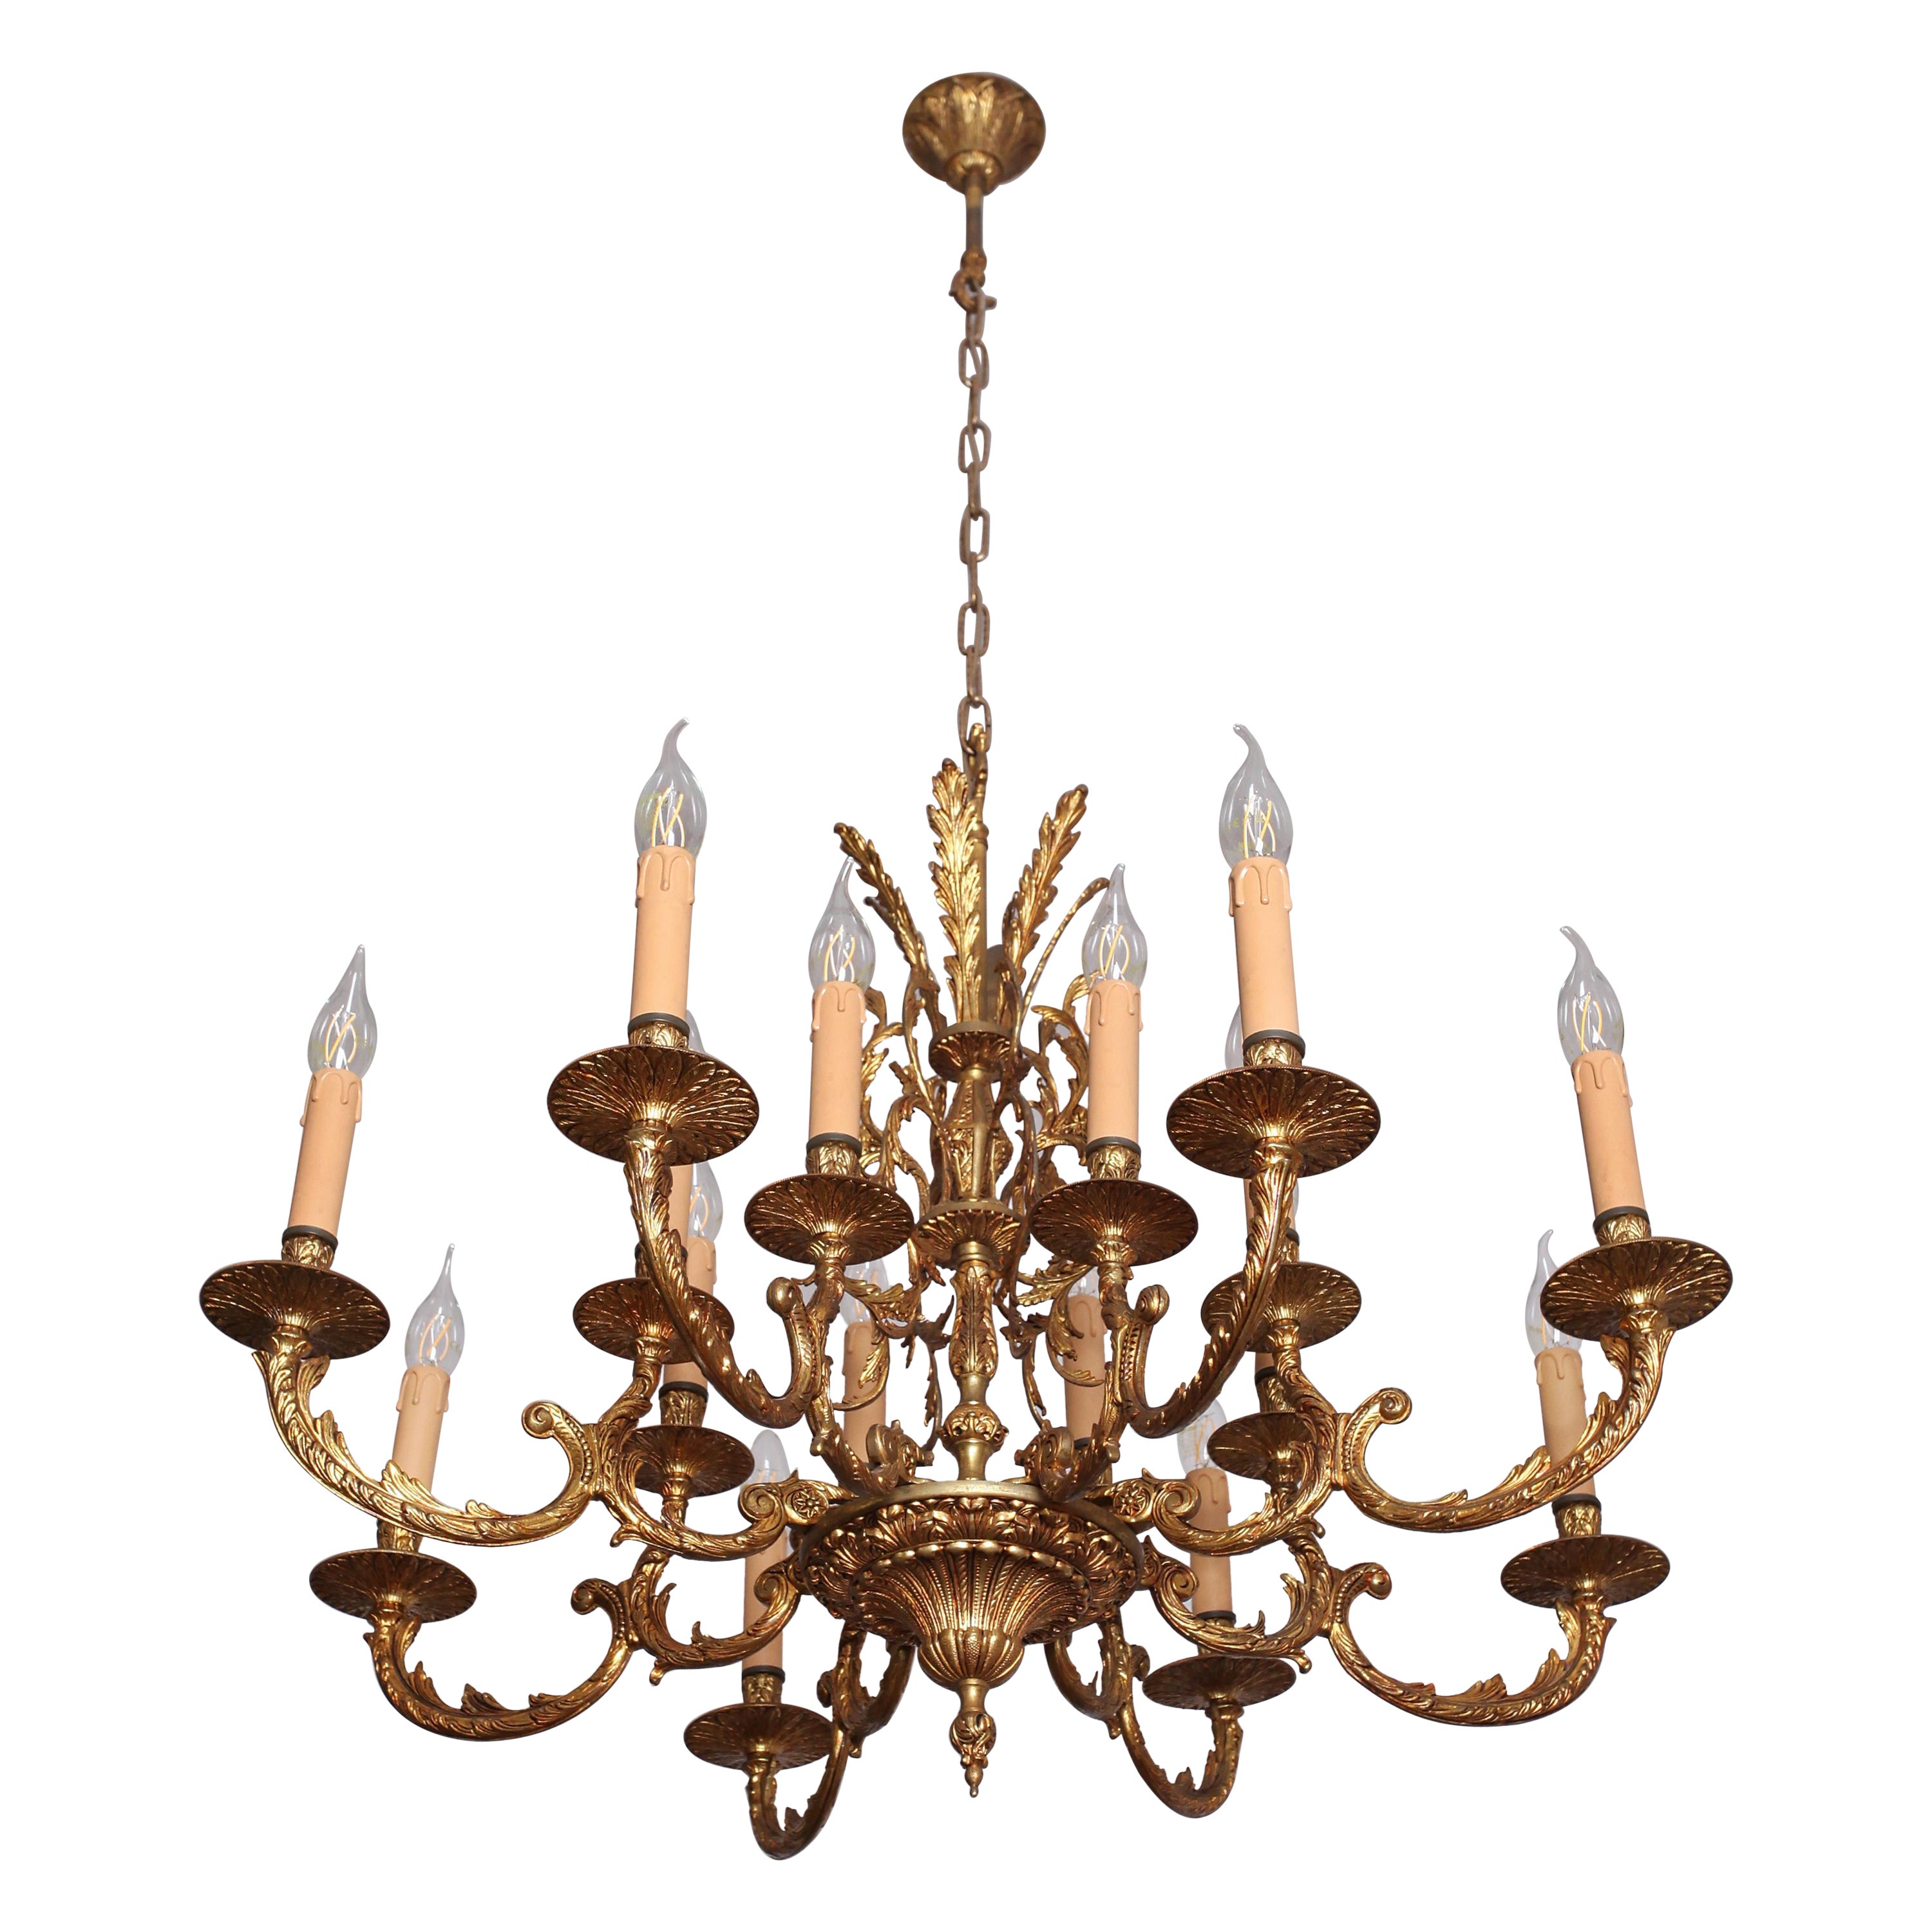 Rococo chandelier made of polished brass 16 bulbs